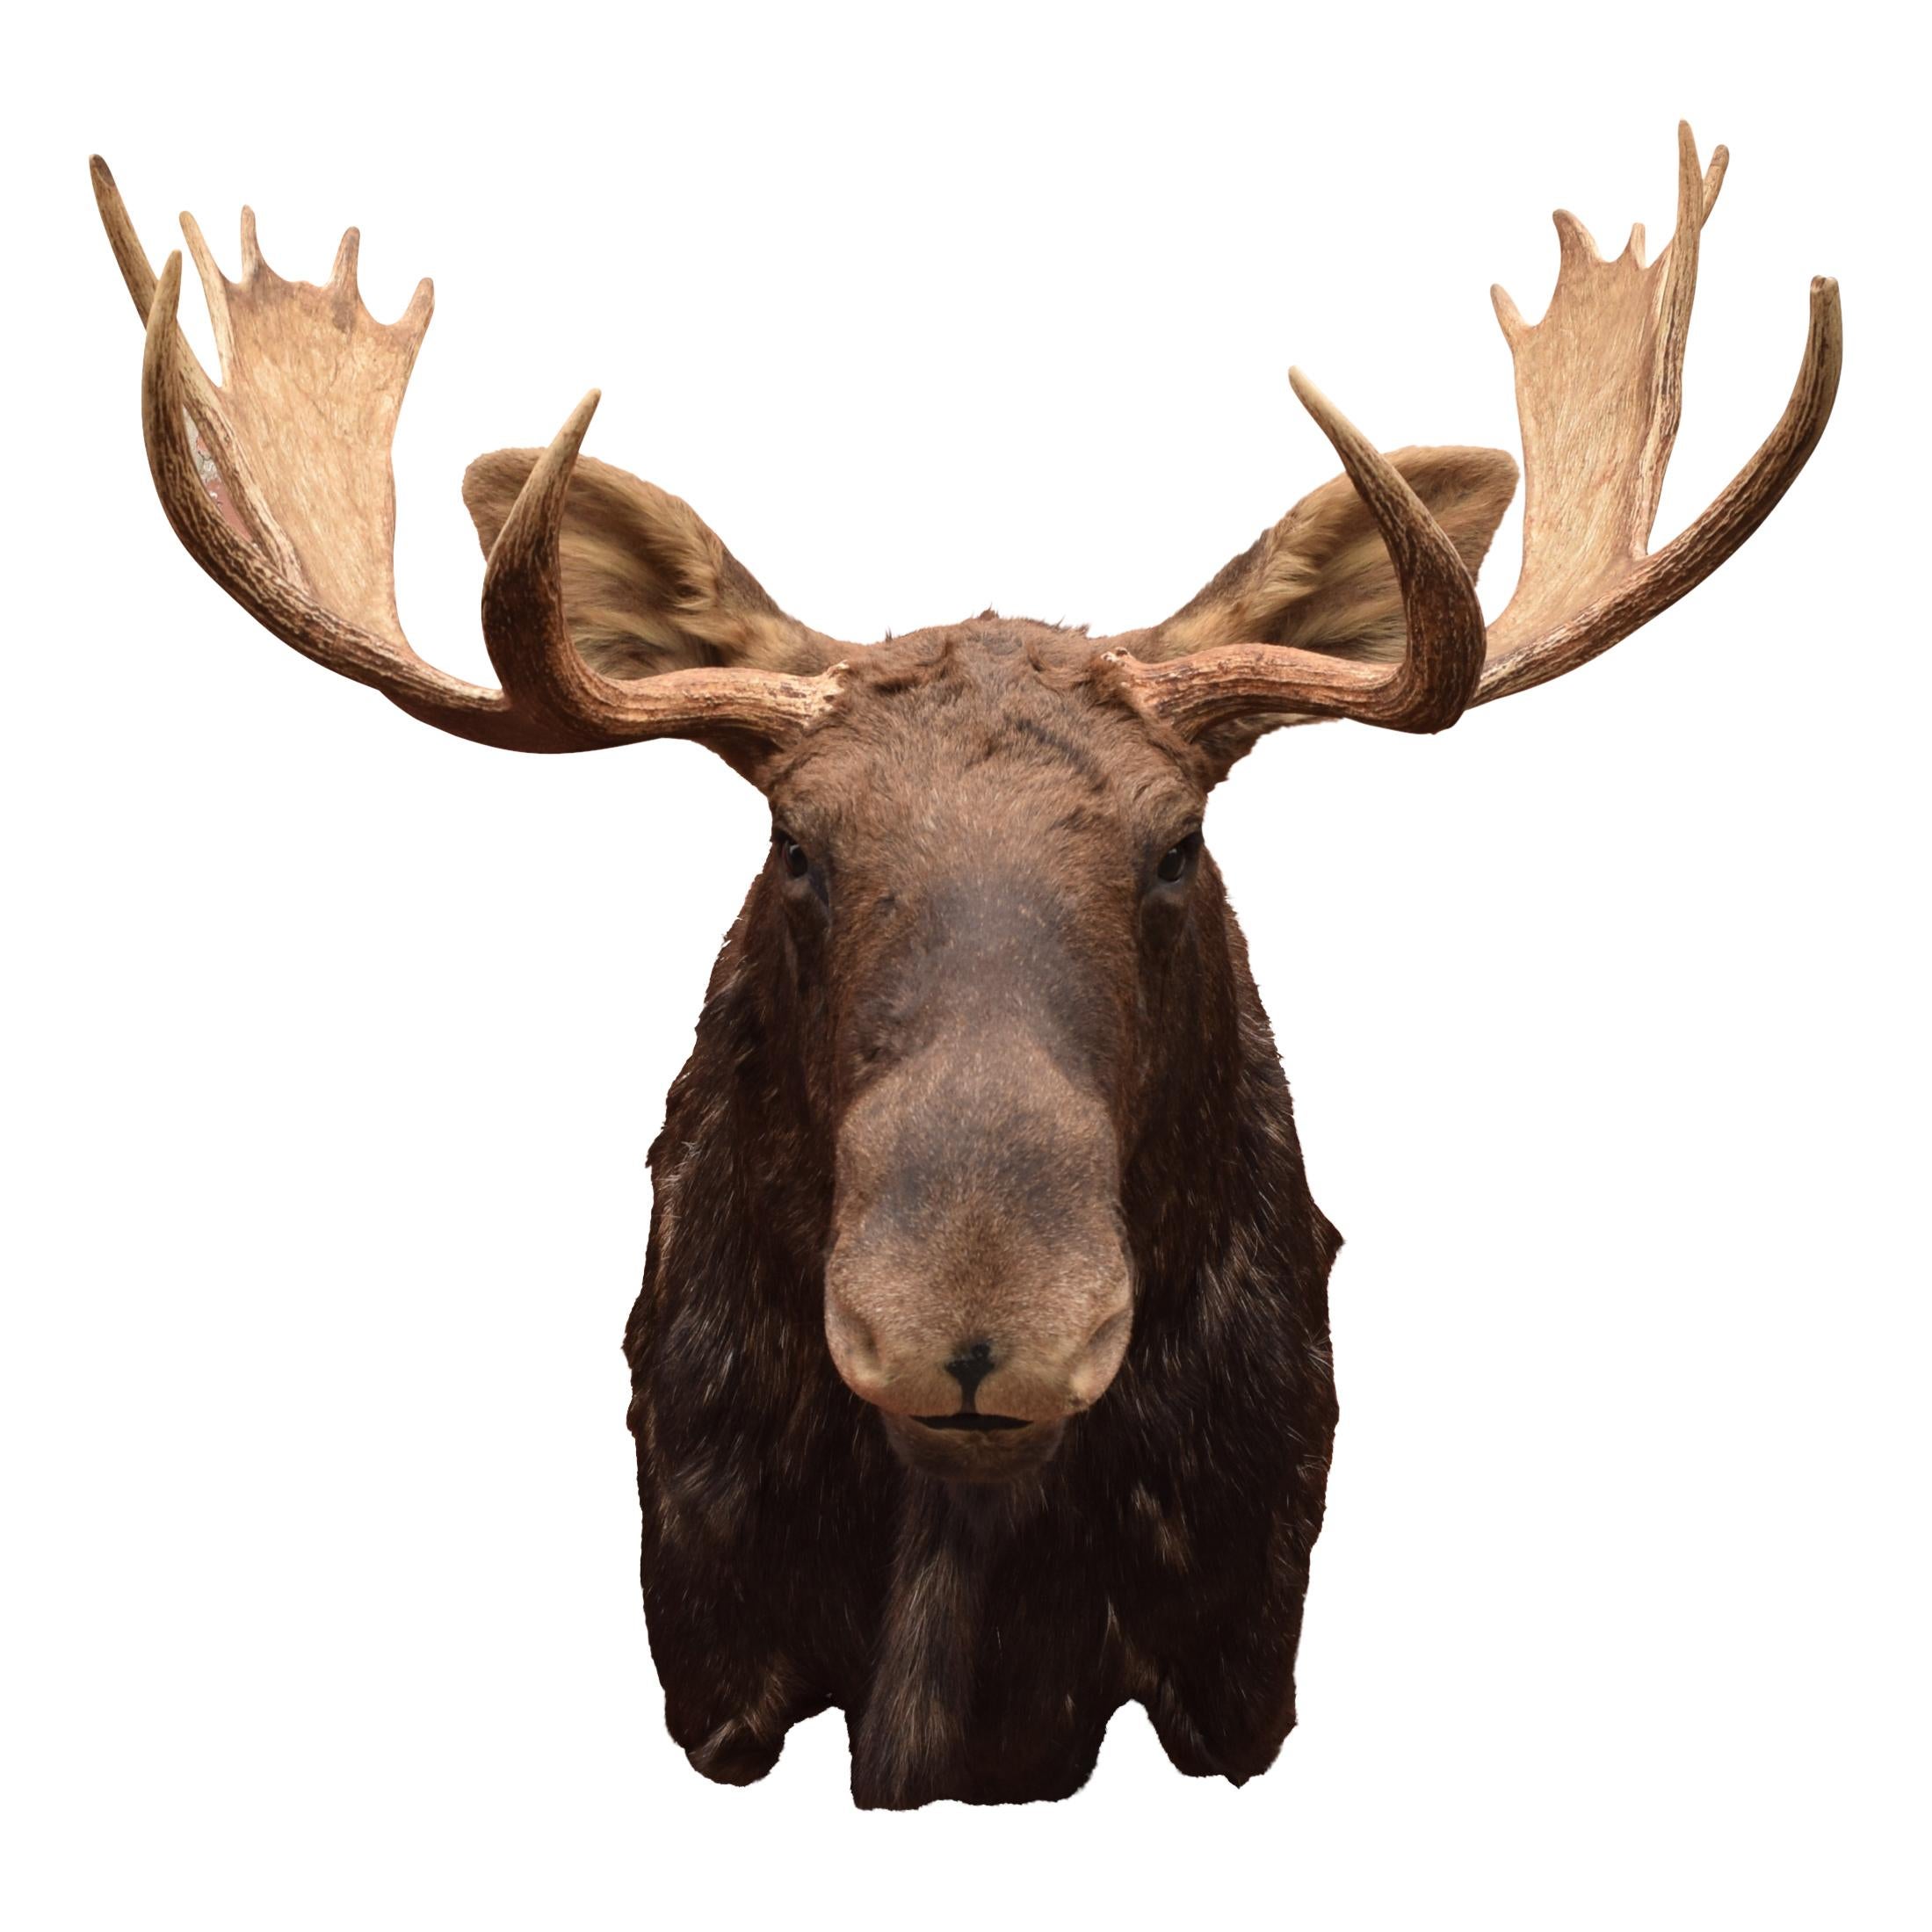 Dark brown Shiras moose from North Idaho. Nice mount. Perfect for lodge, cabin or rustic decor.

Period: Contemporary
Origin: North Idaho
Size: 40